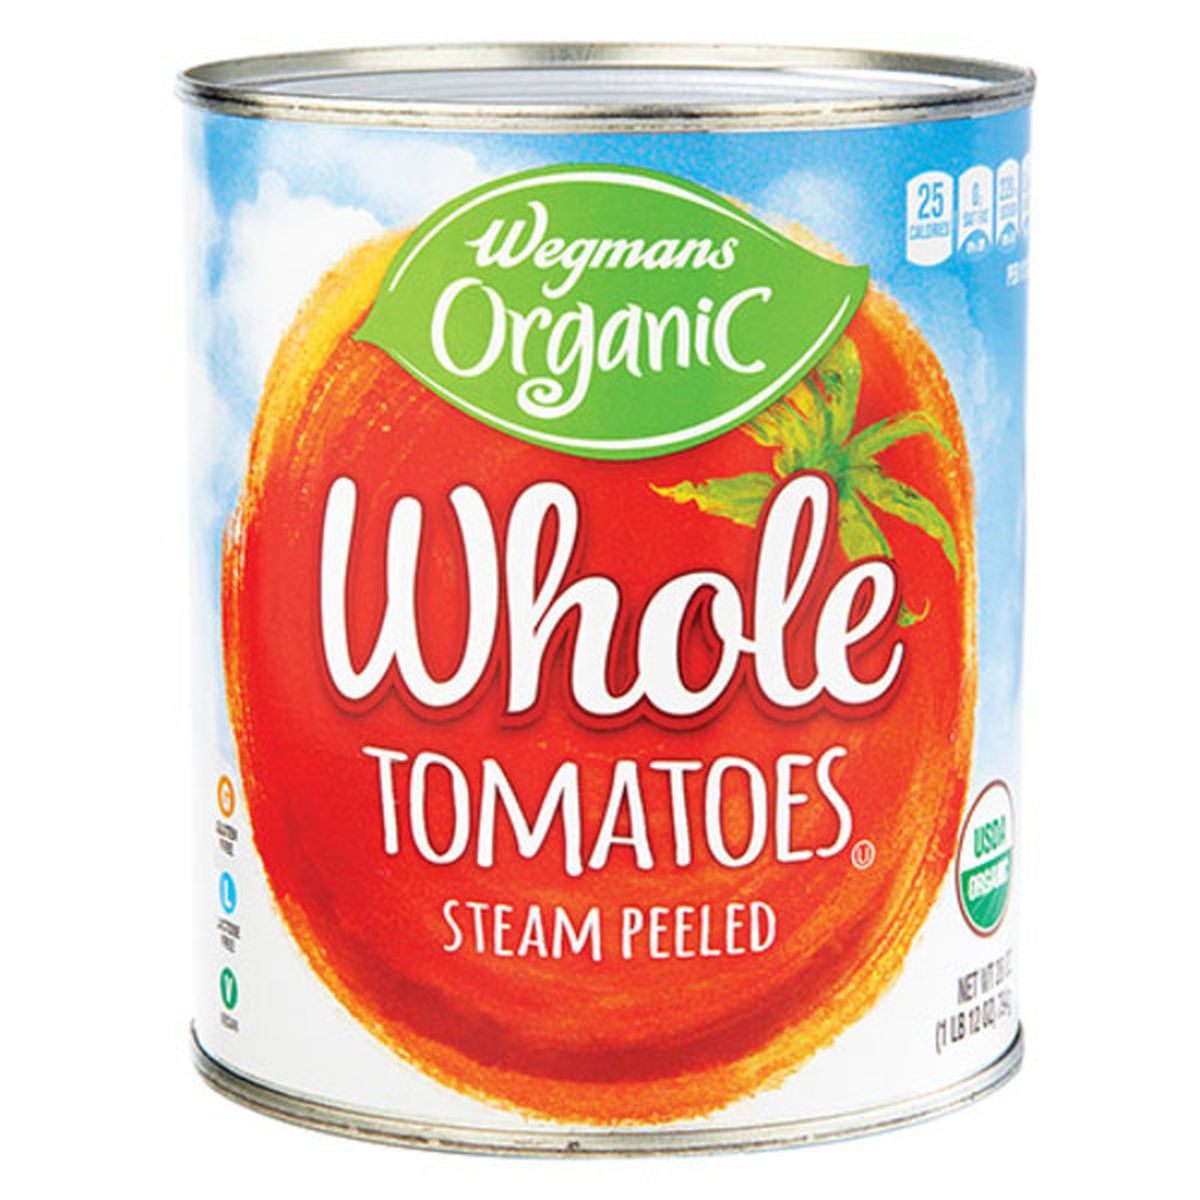 Calories in Wegmans Organic Whole Tomatoes